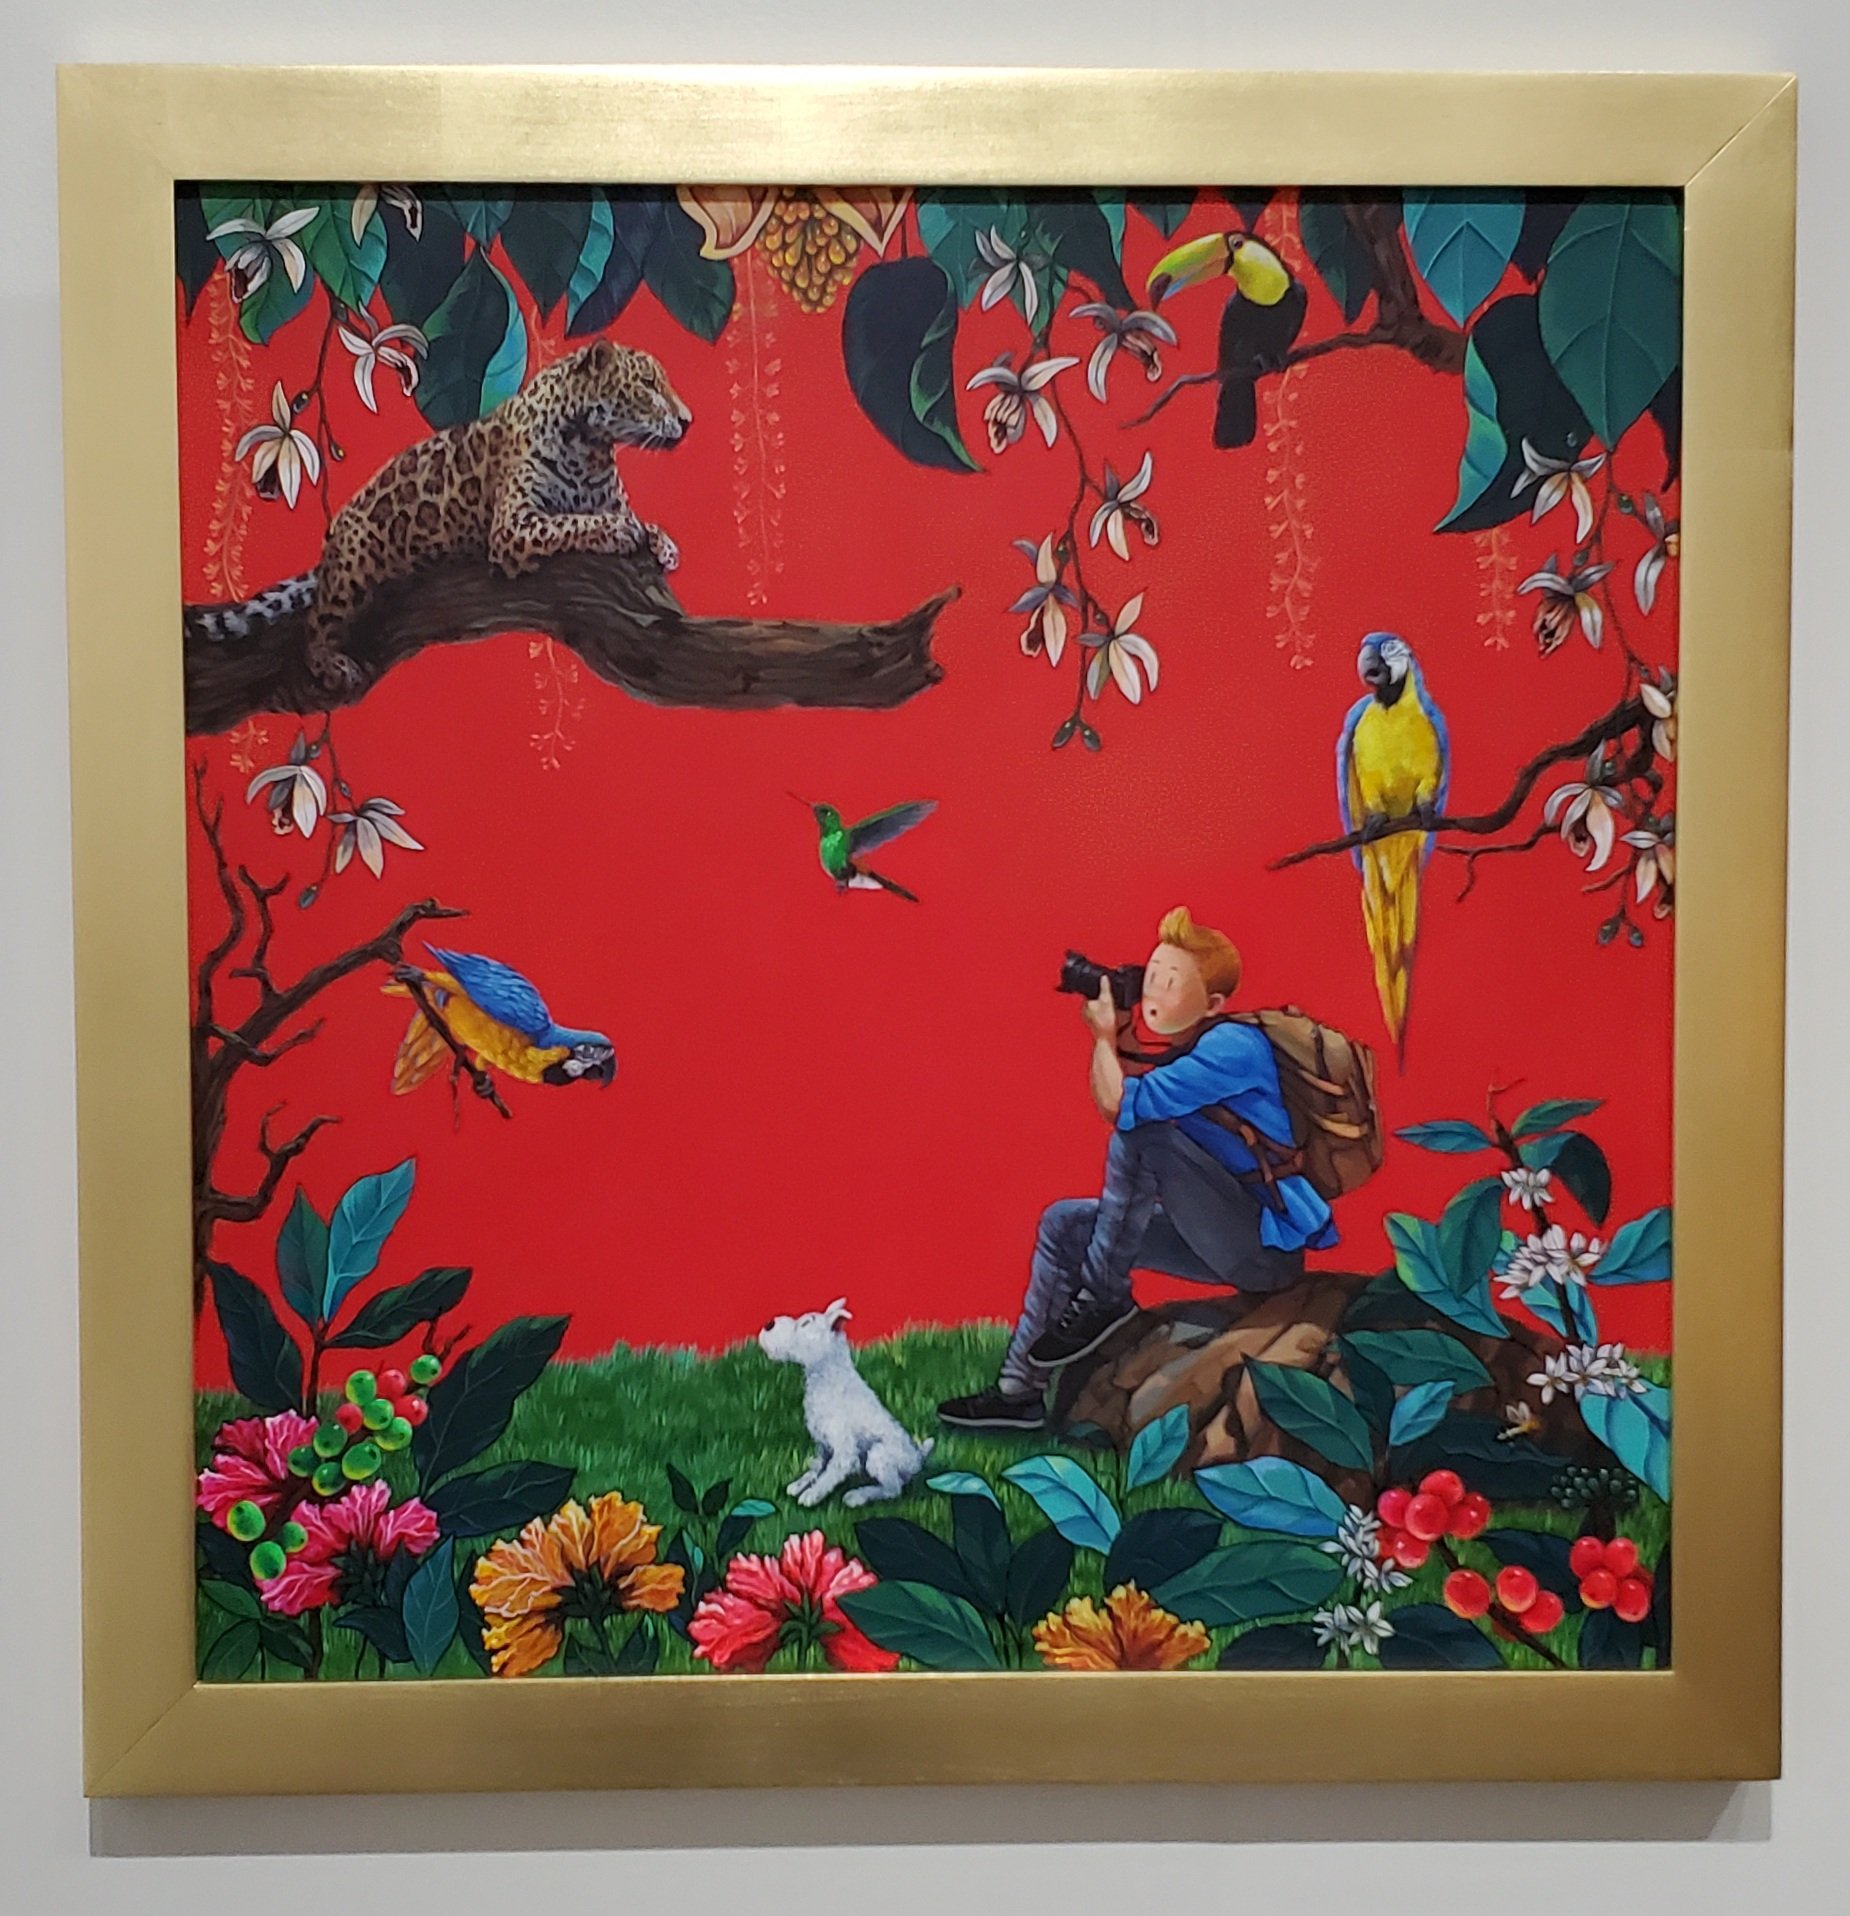 Galería Duque Arango. Gabriel Ortega, De la serie TinTin en el Tropico, 2023. Oil on canvas, 80 x 80cm.  Image: Irina Rothenberg.